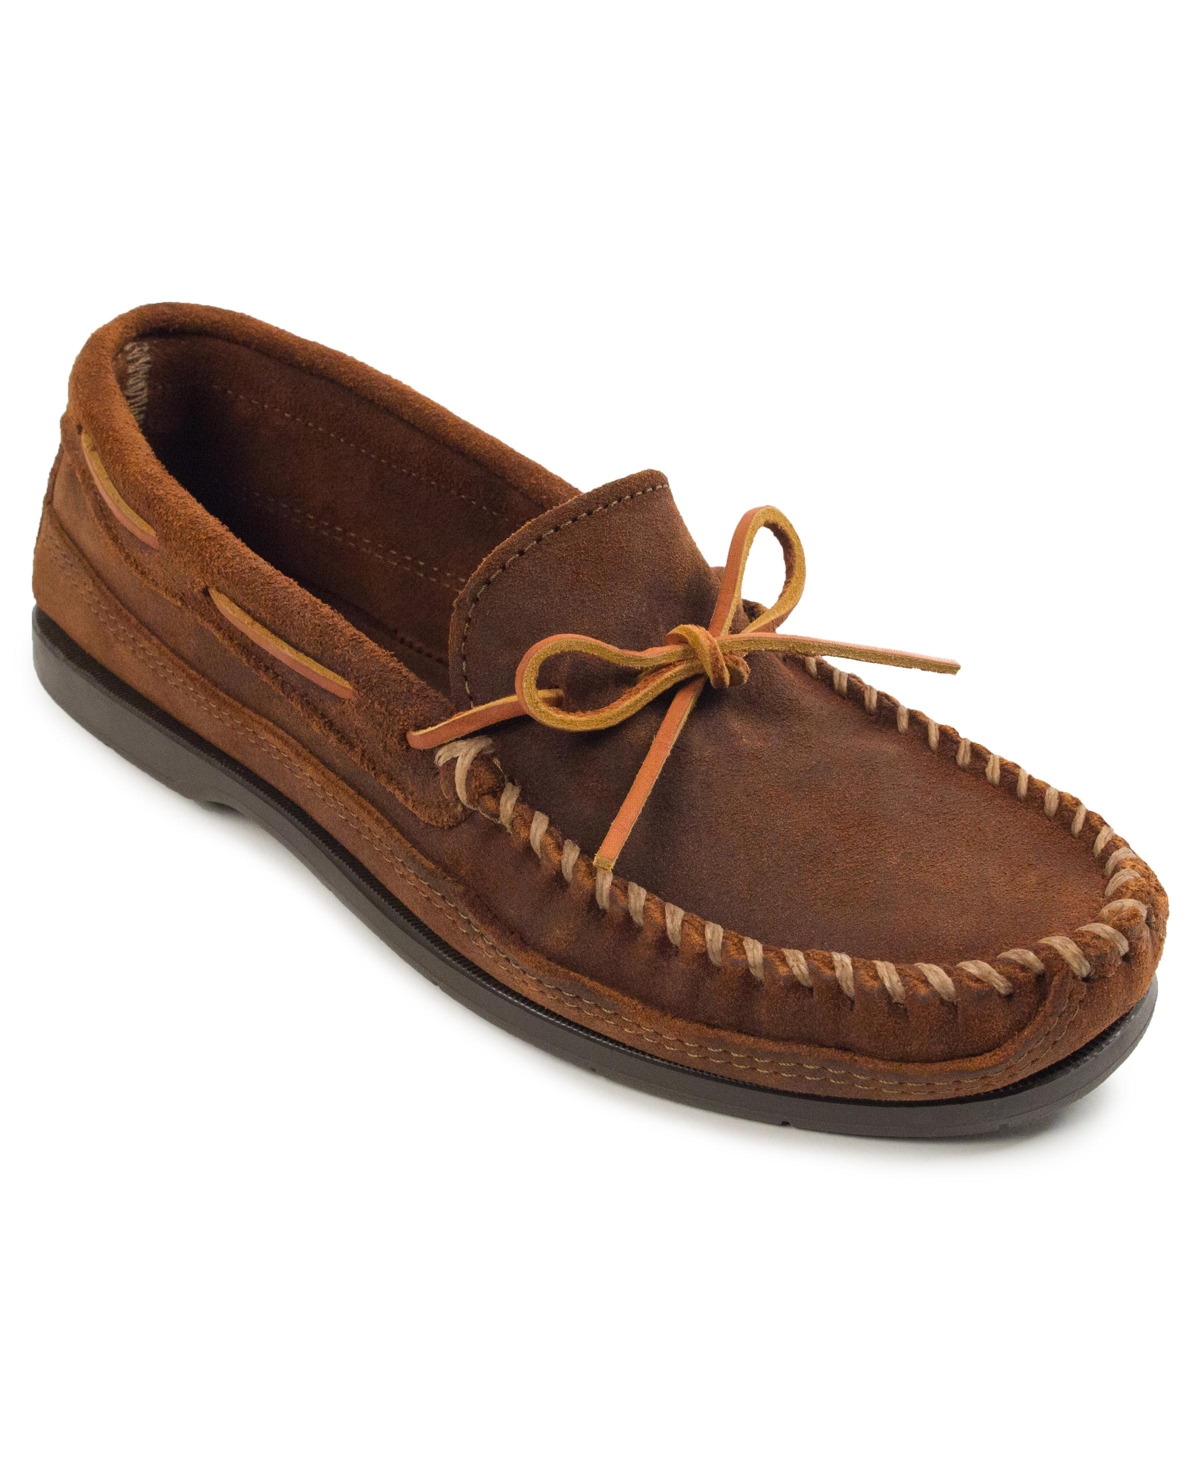 Men's Essential Hardsole Moccasin Shoes - Brown